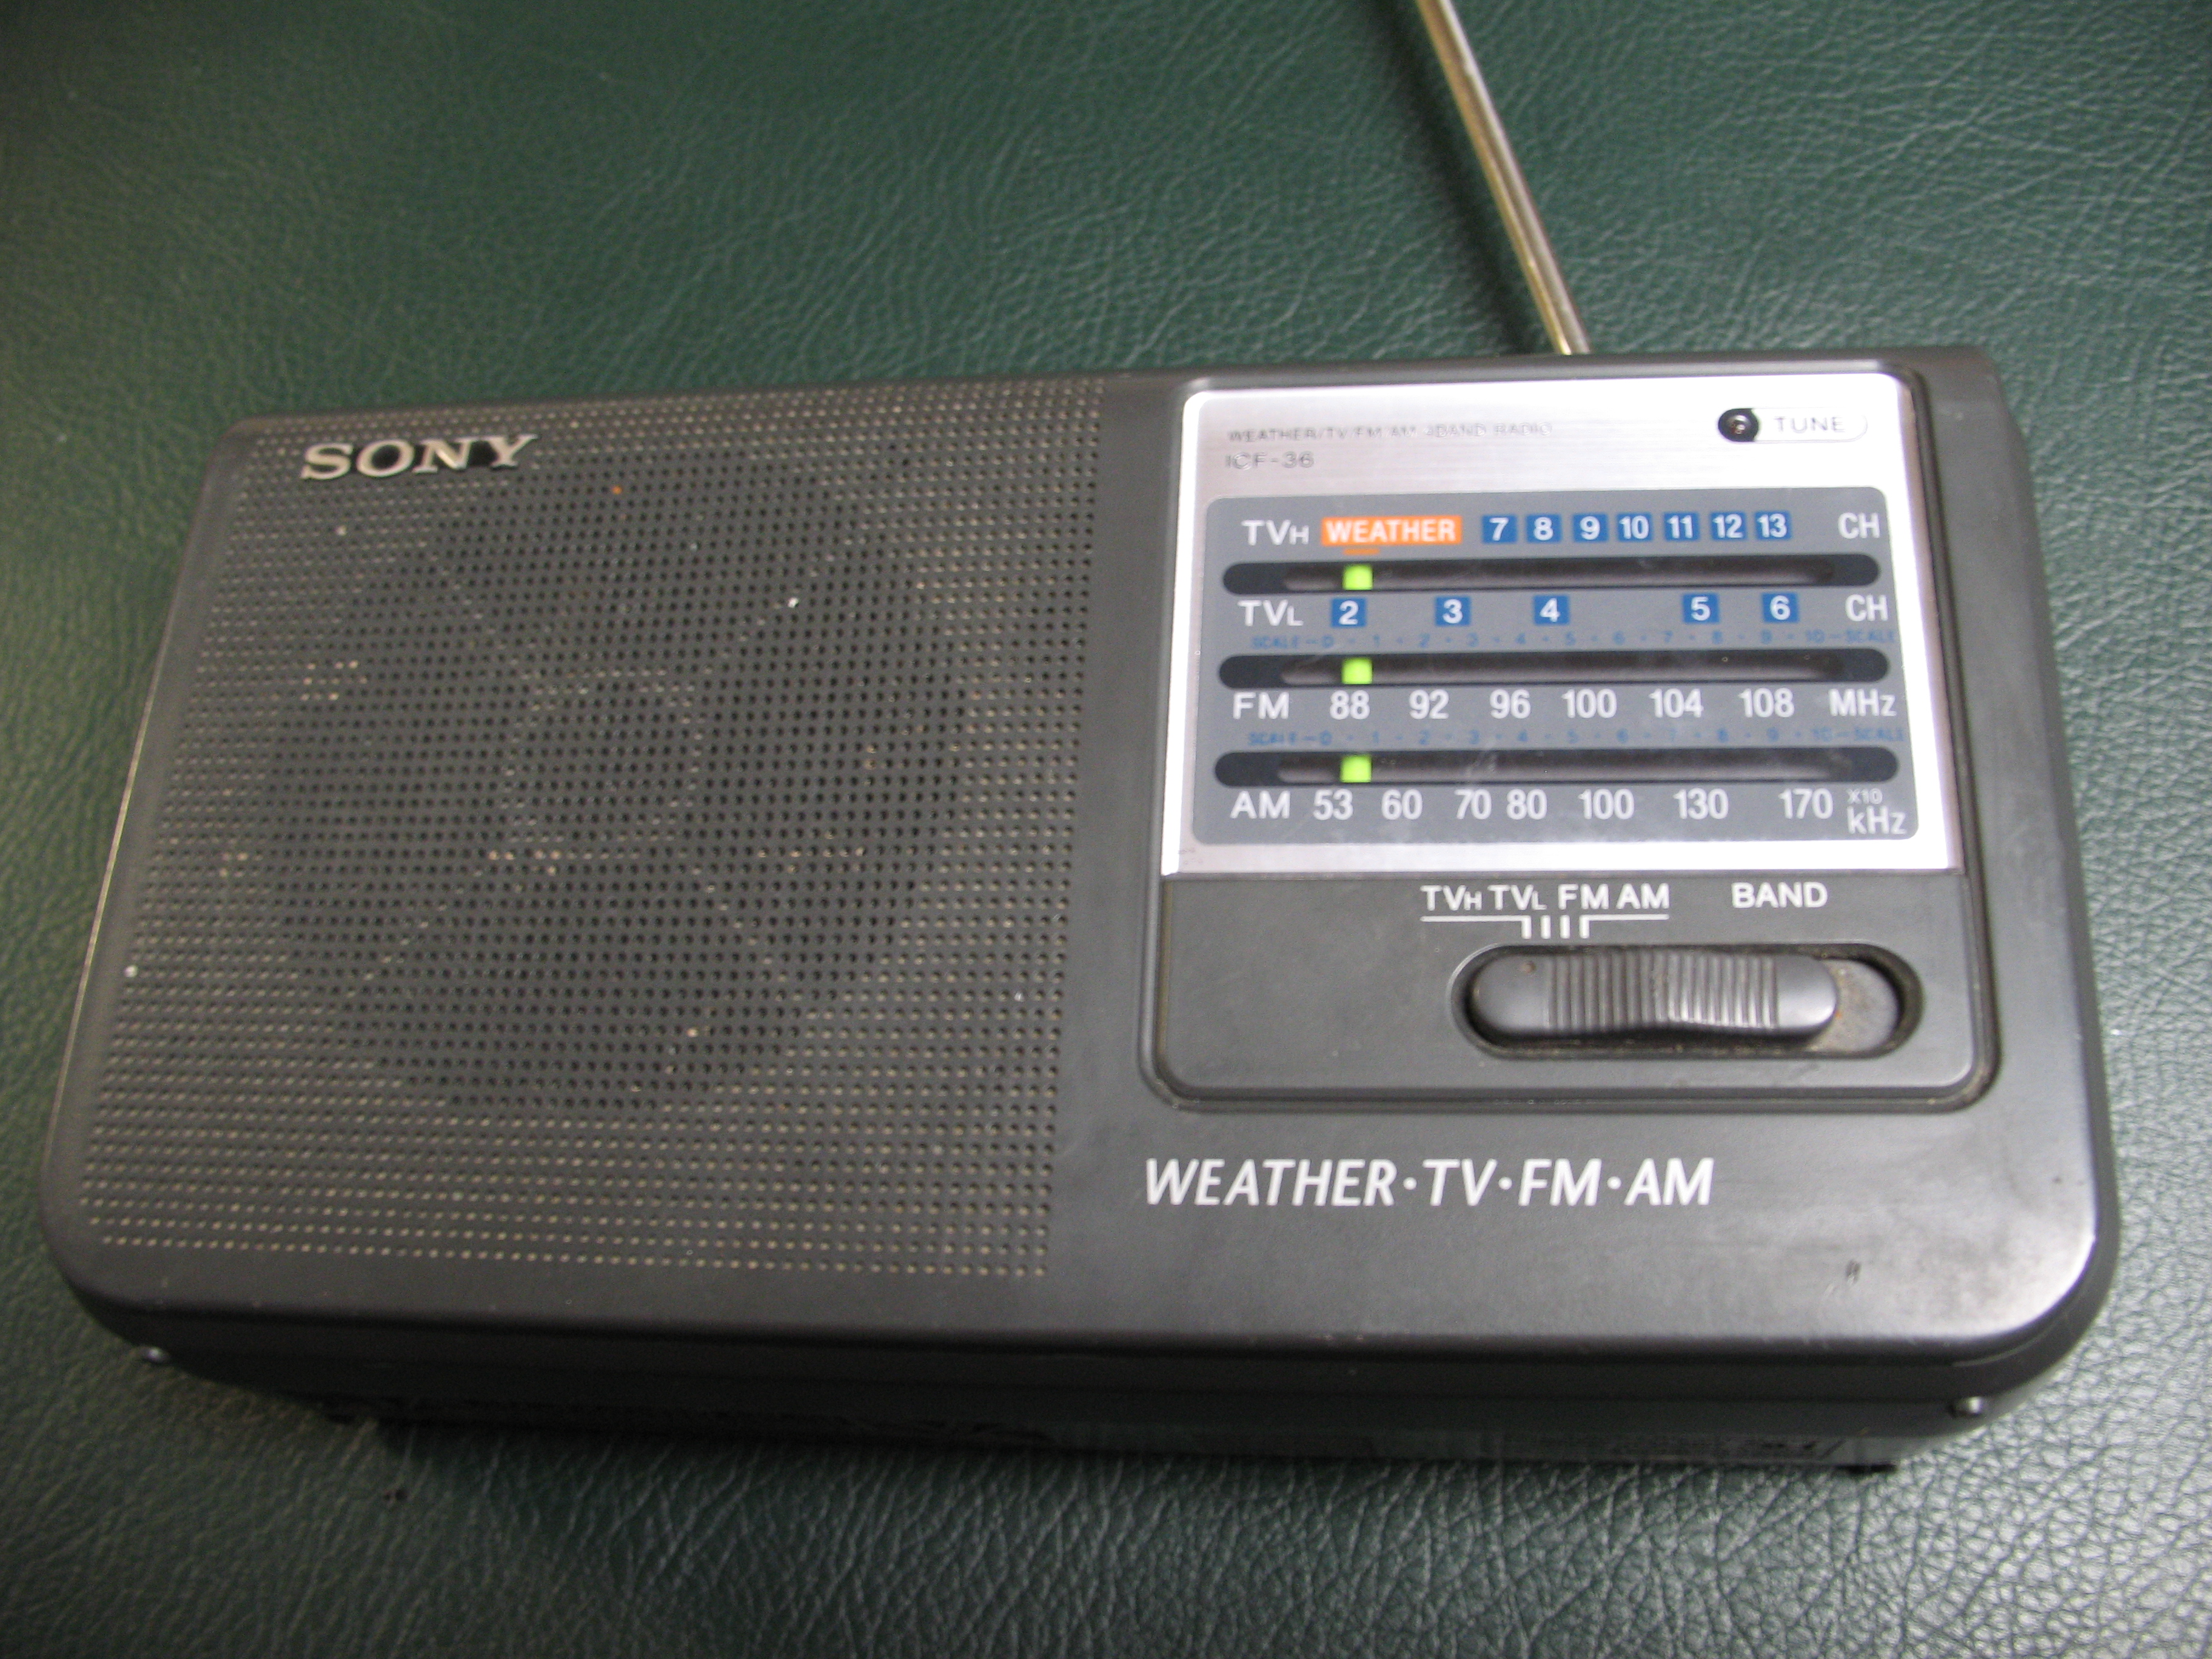 Radio portátil Sony ICFP36 - Almacen